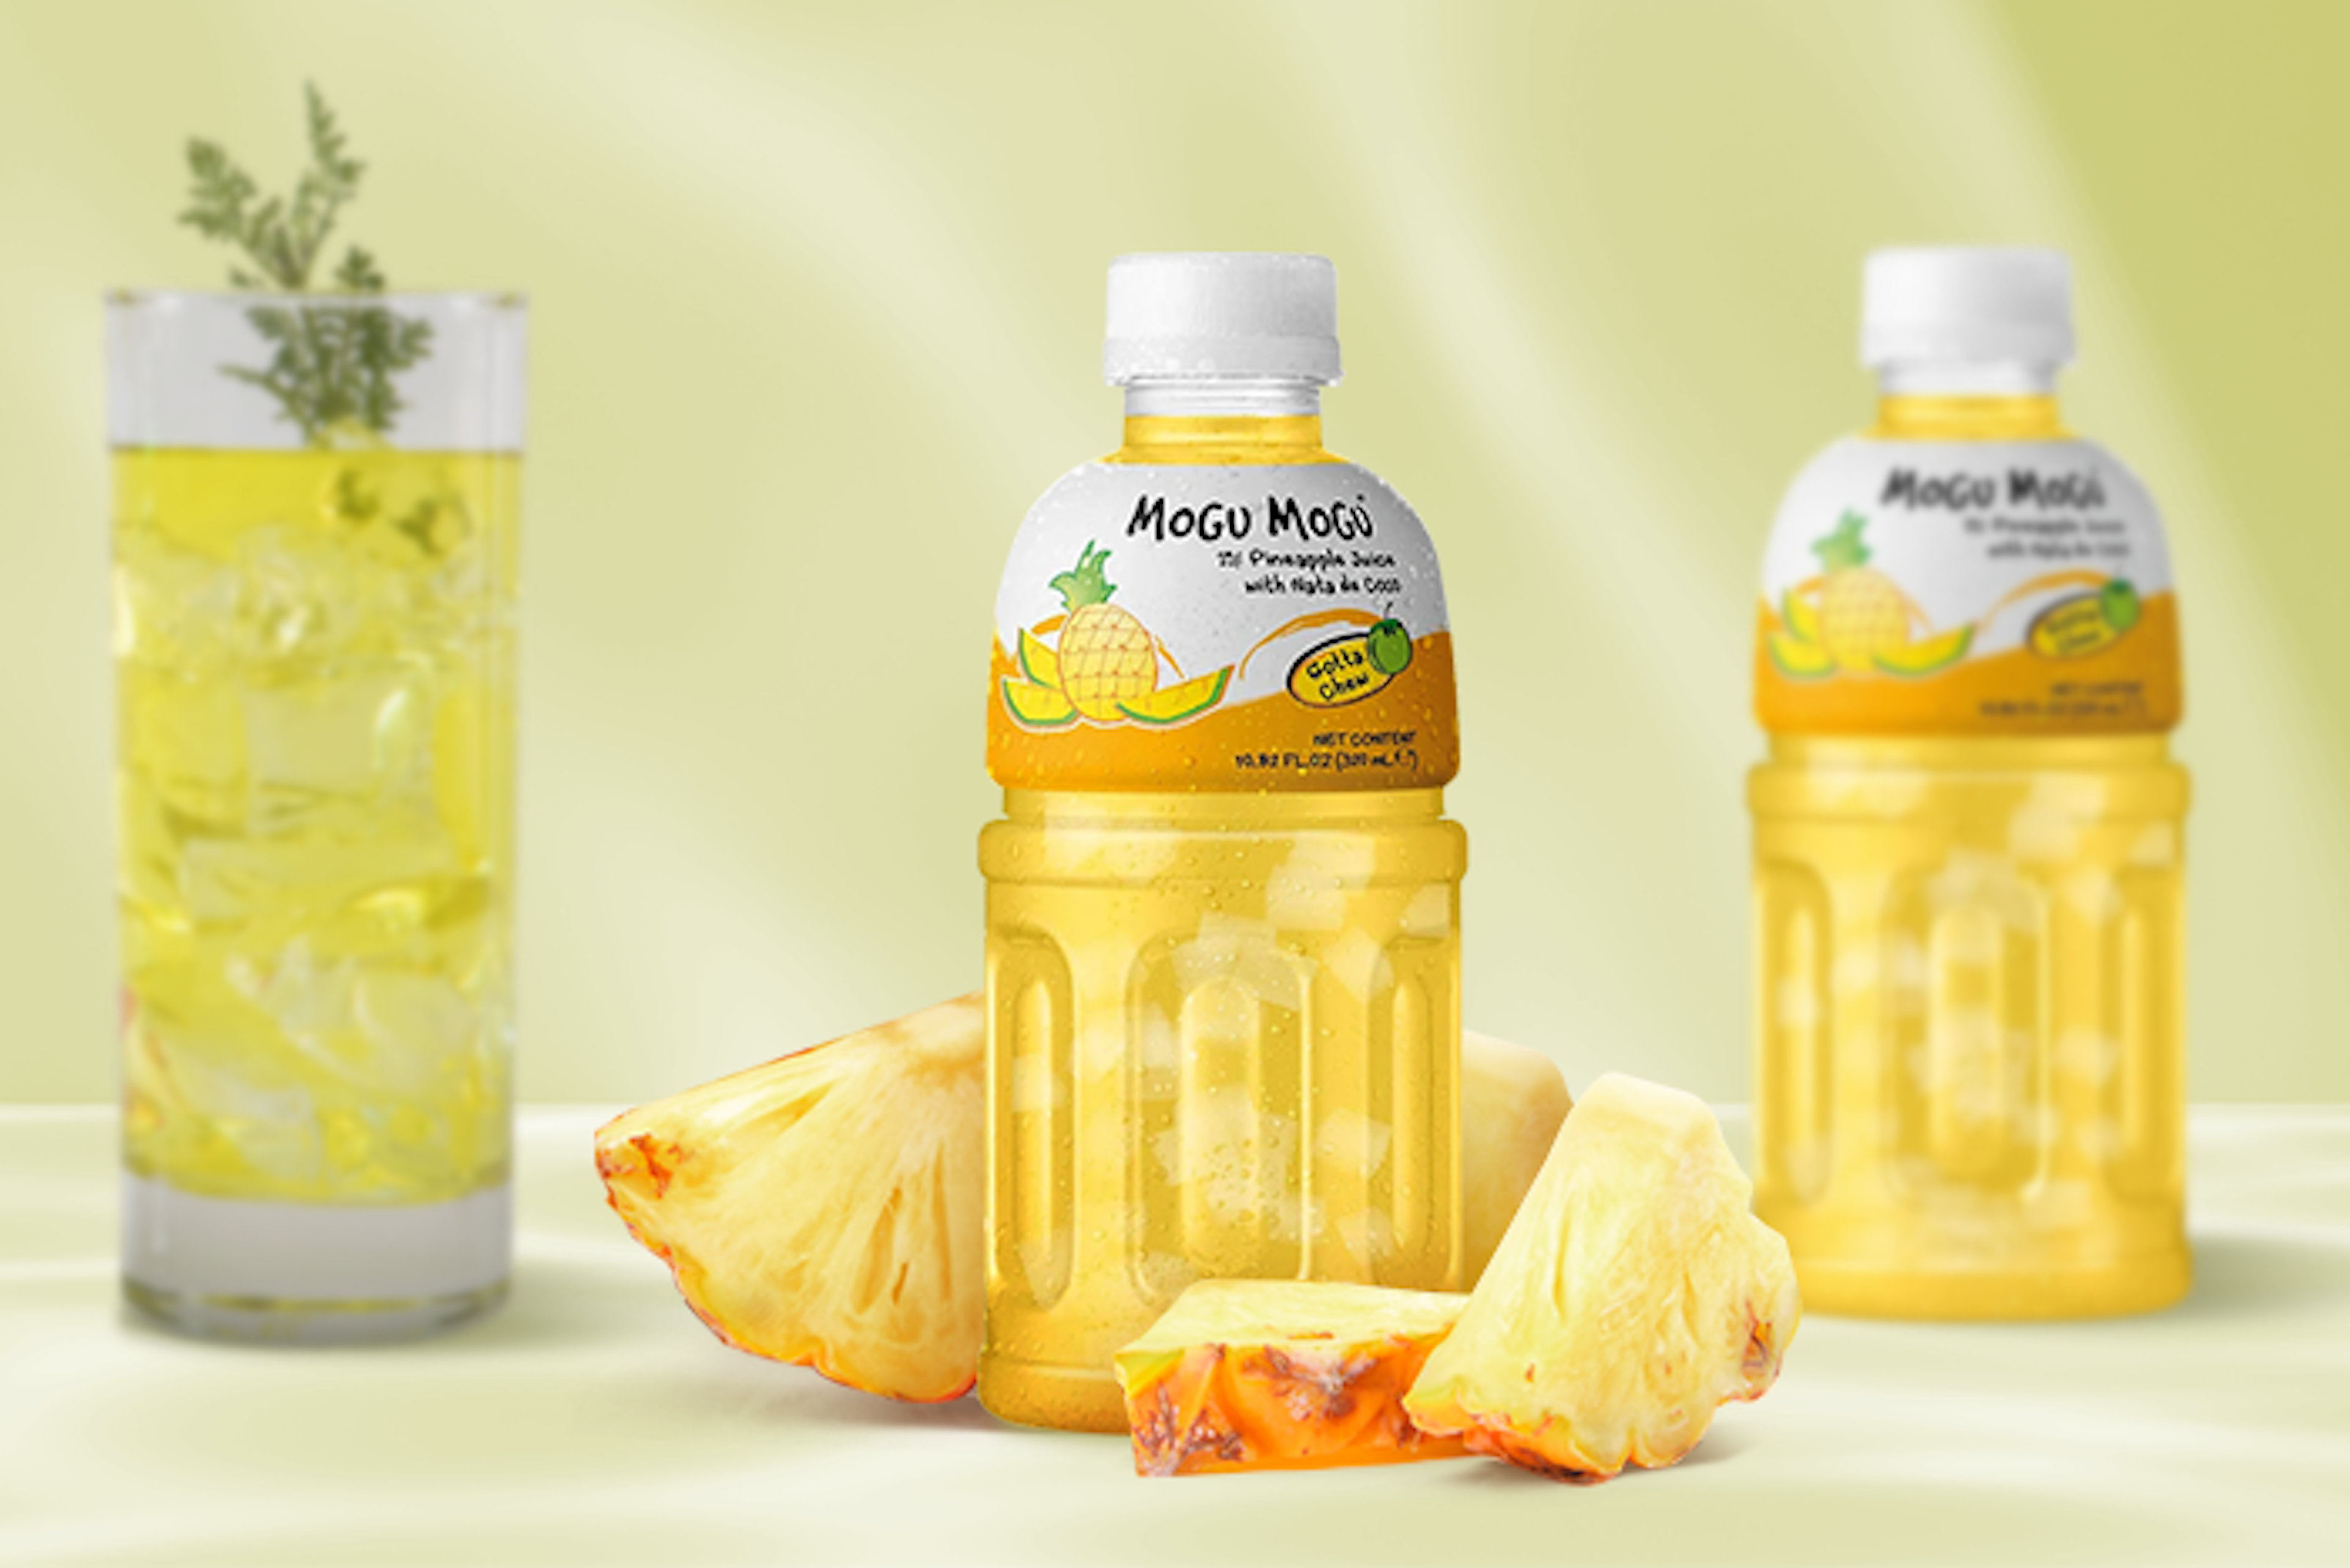 Mogu Mogu Pineapple Drink with Nata de Coco 320ml - Tropical and Refreshing